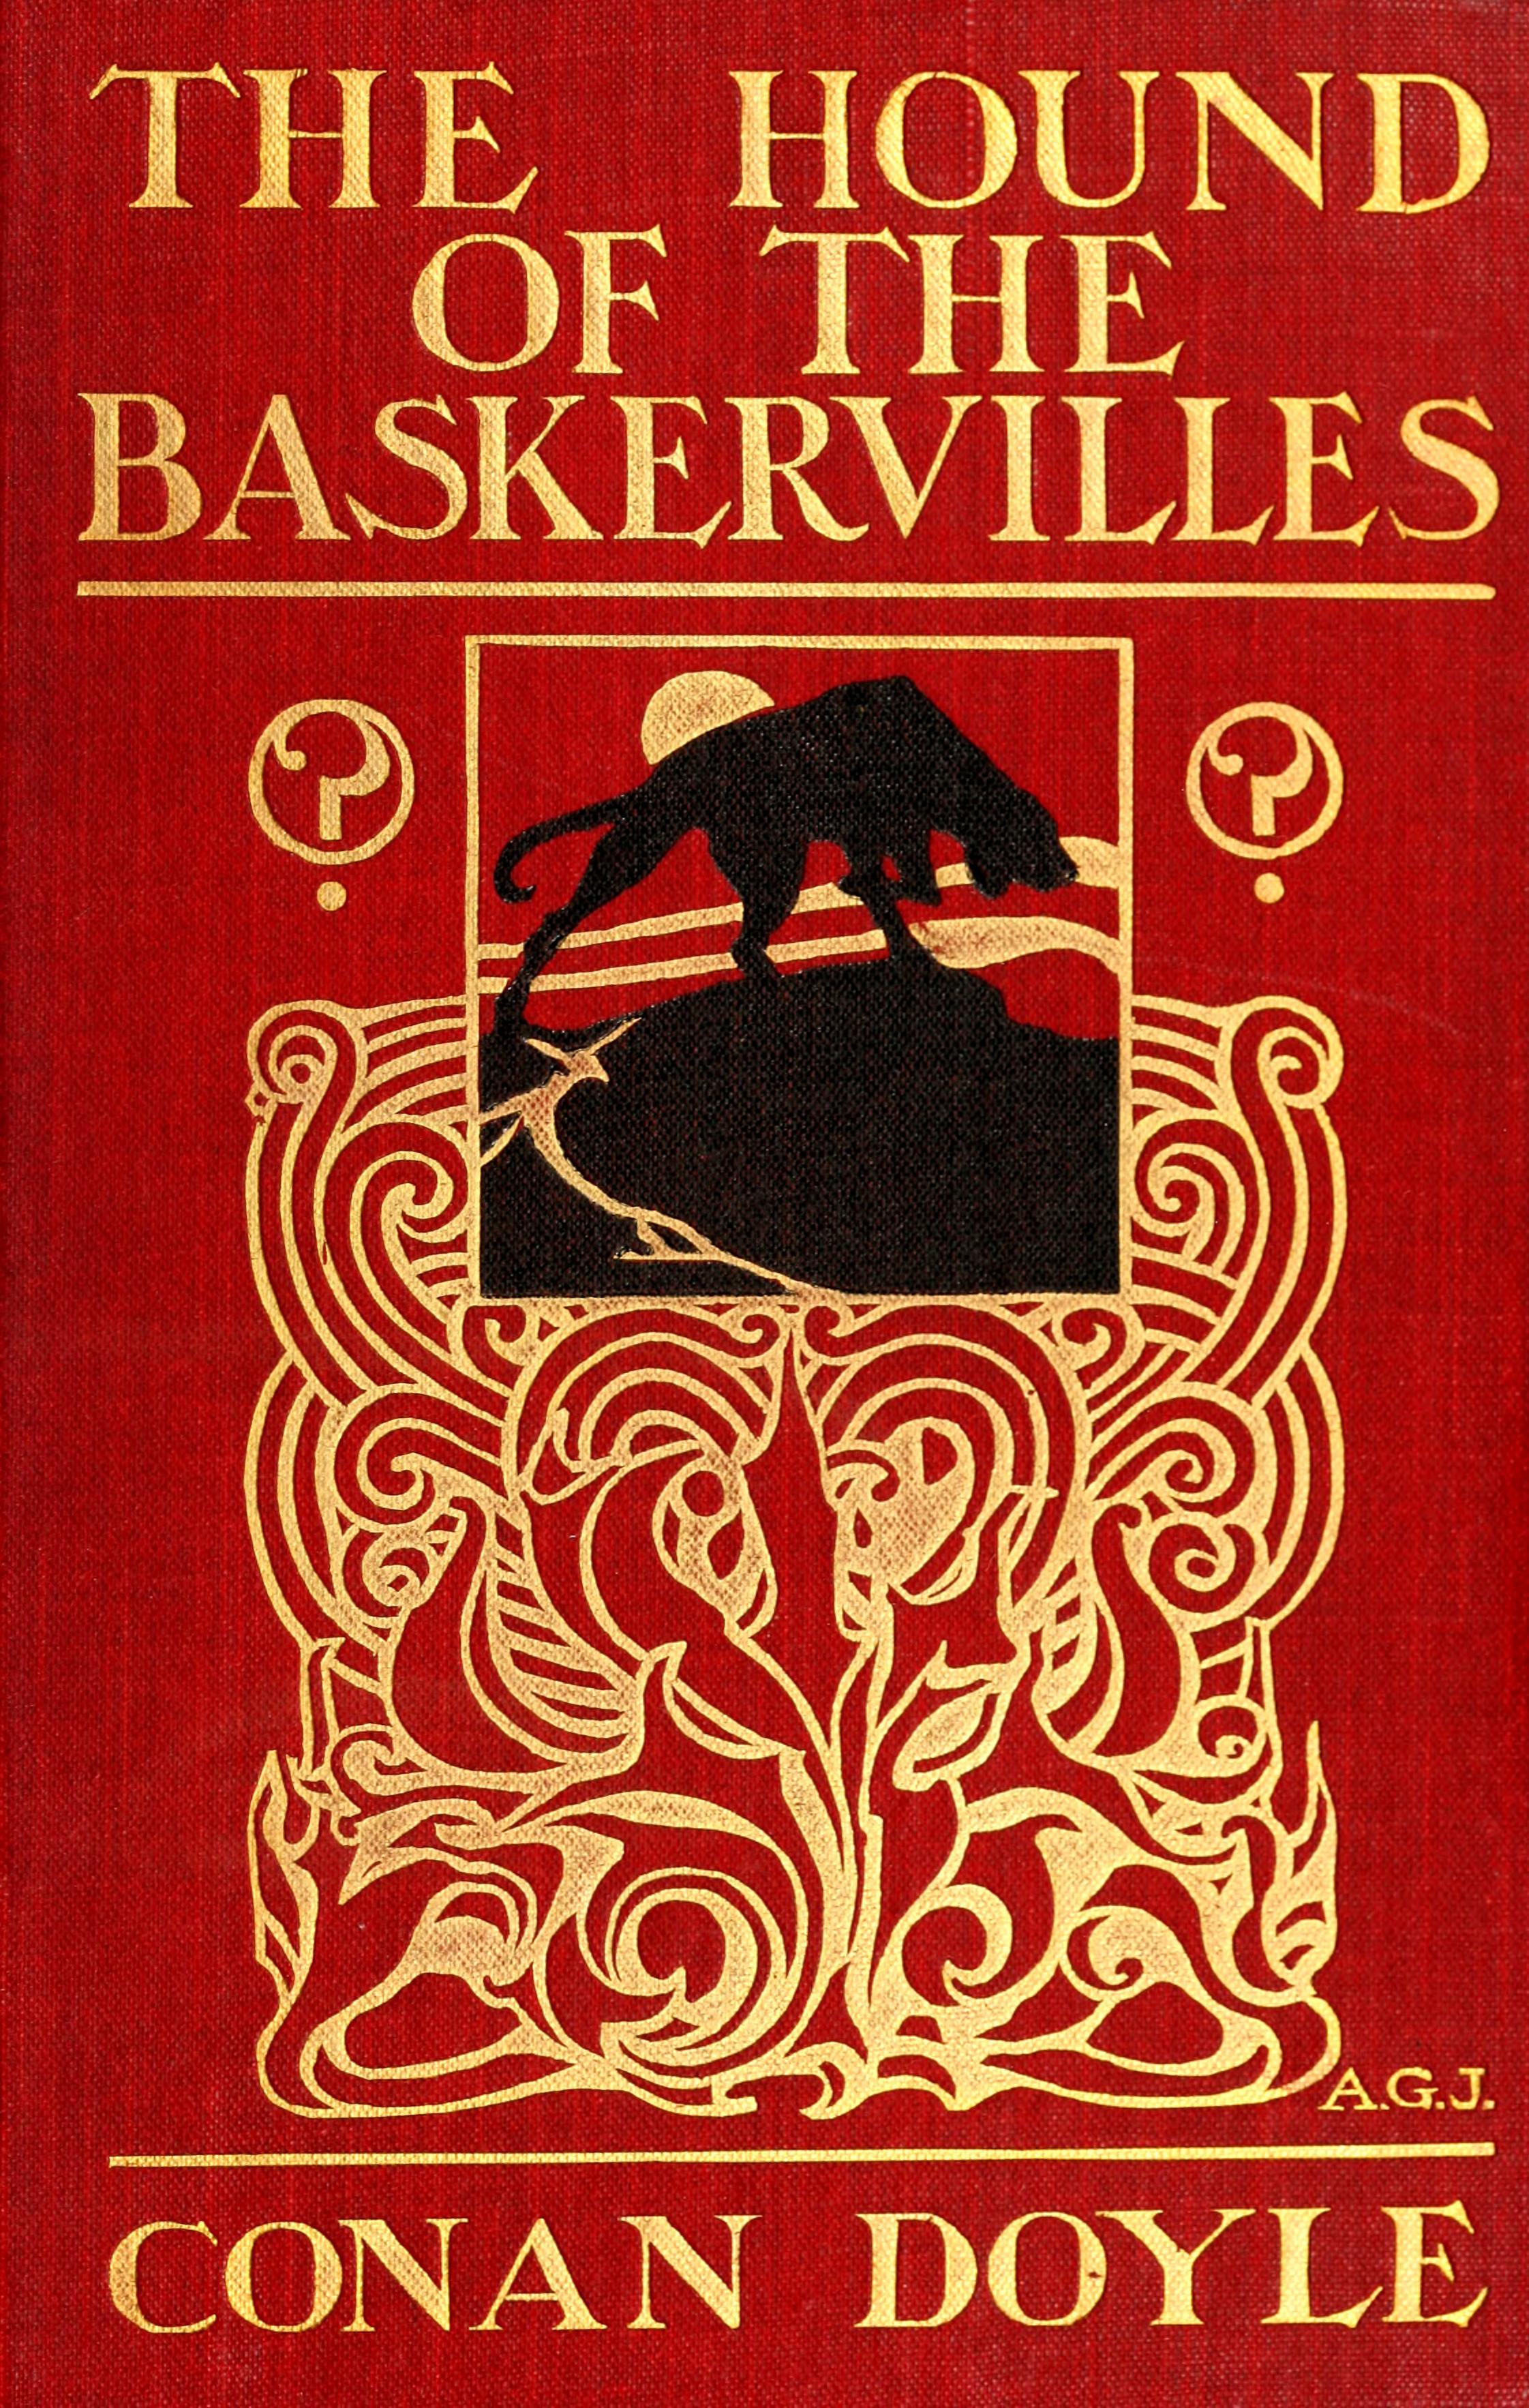 Arthur Conan Doyle's The Hound of the Baskervilles